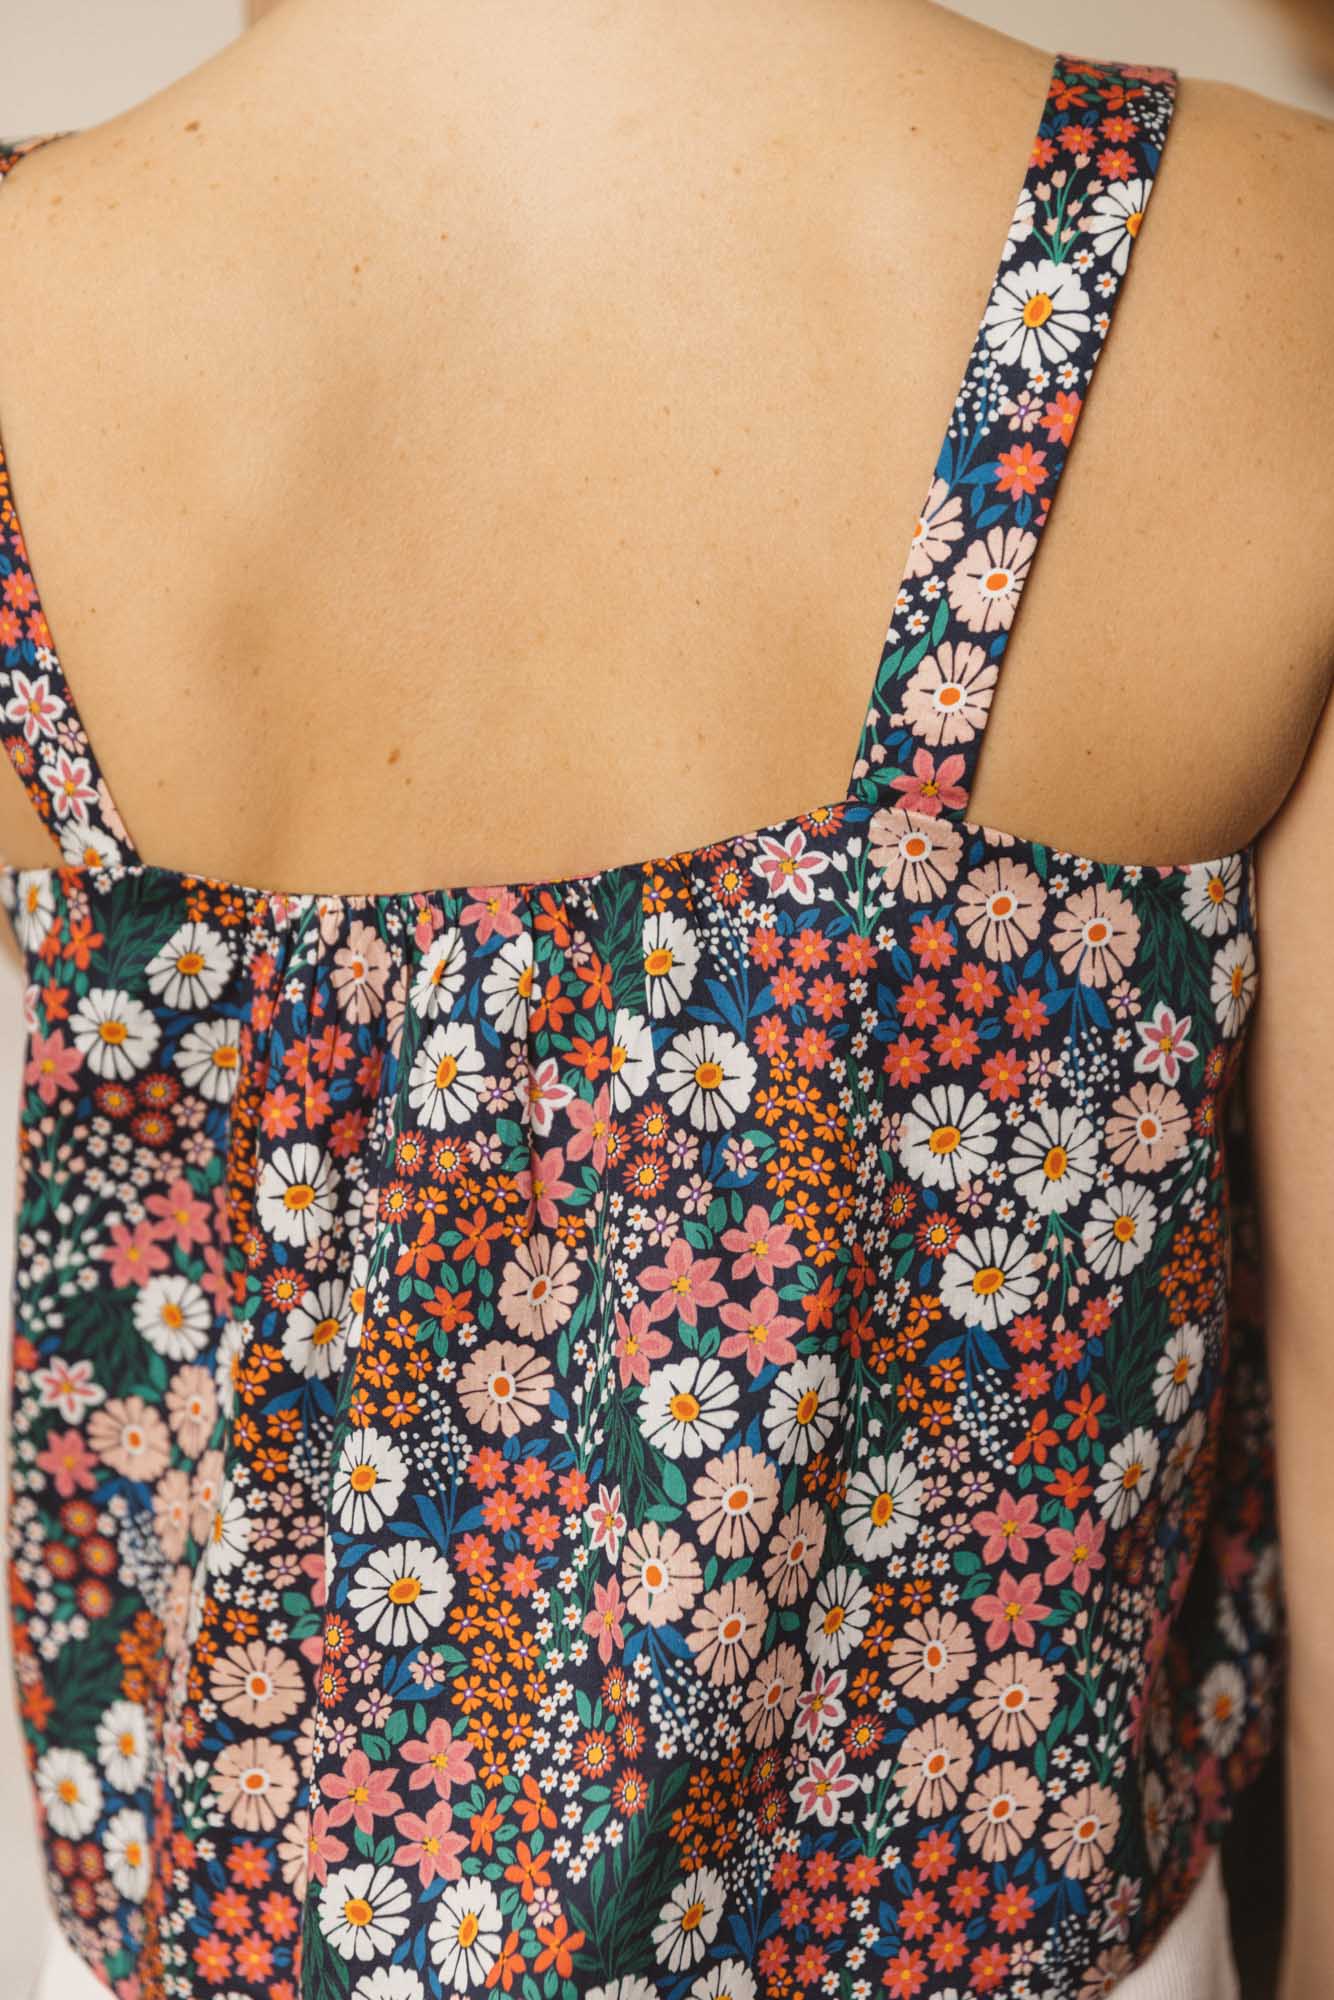 Yoga camisole with daisy print